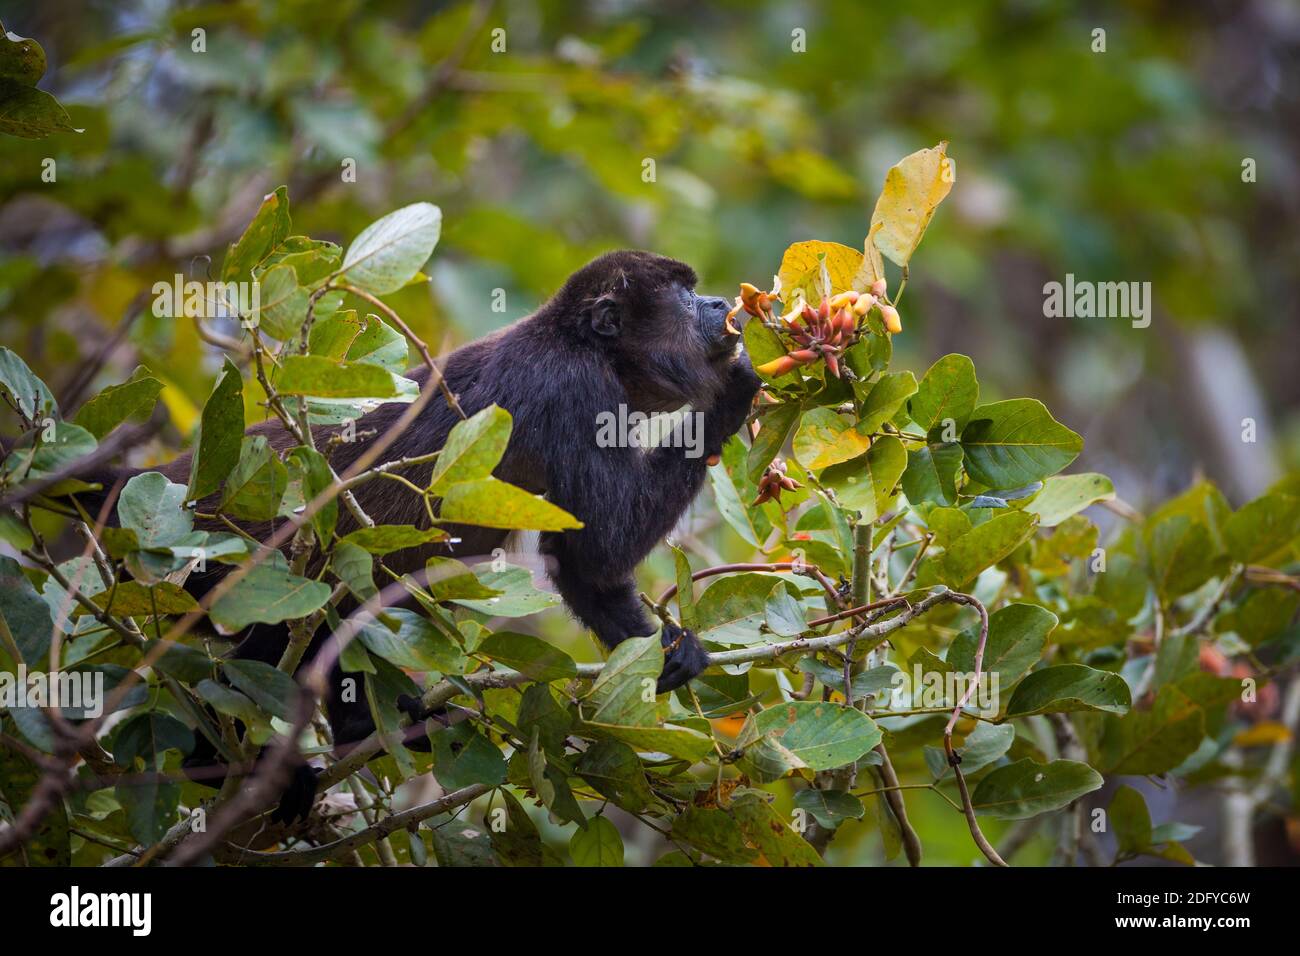 Panama wildlife with a Mantled Howler Monkey, Alouatta palliata, feeding on flowers in the rainforest of Soberania national park, Republic of Panama. Stock Photo